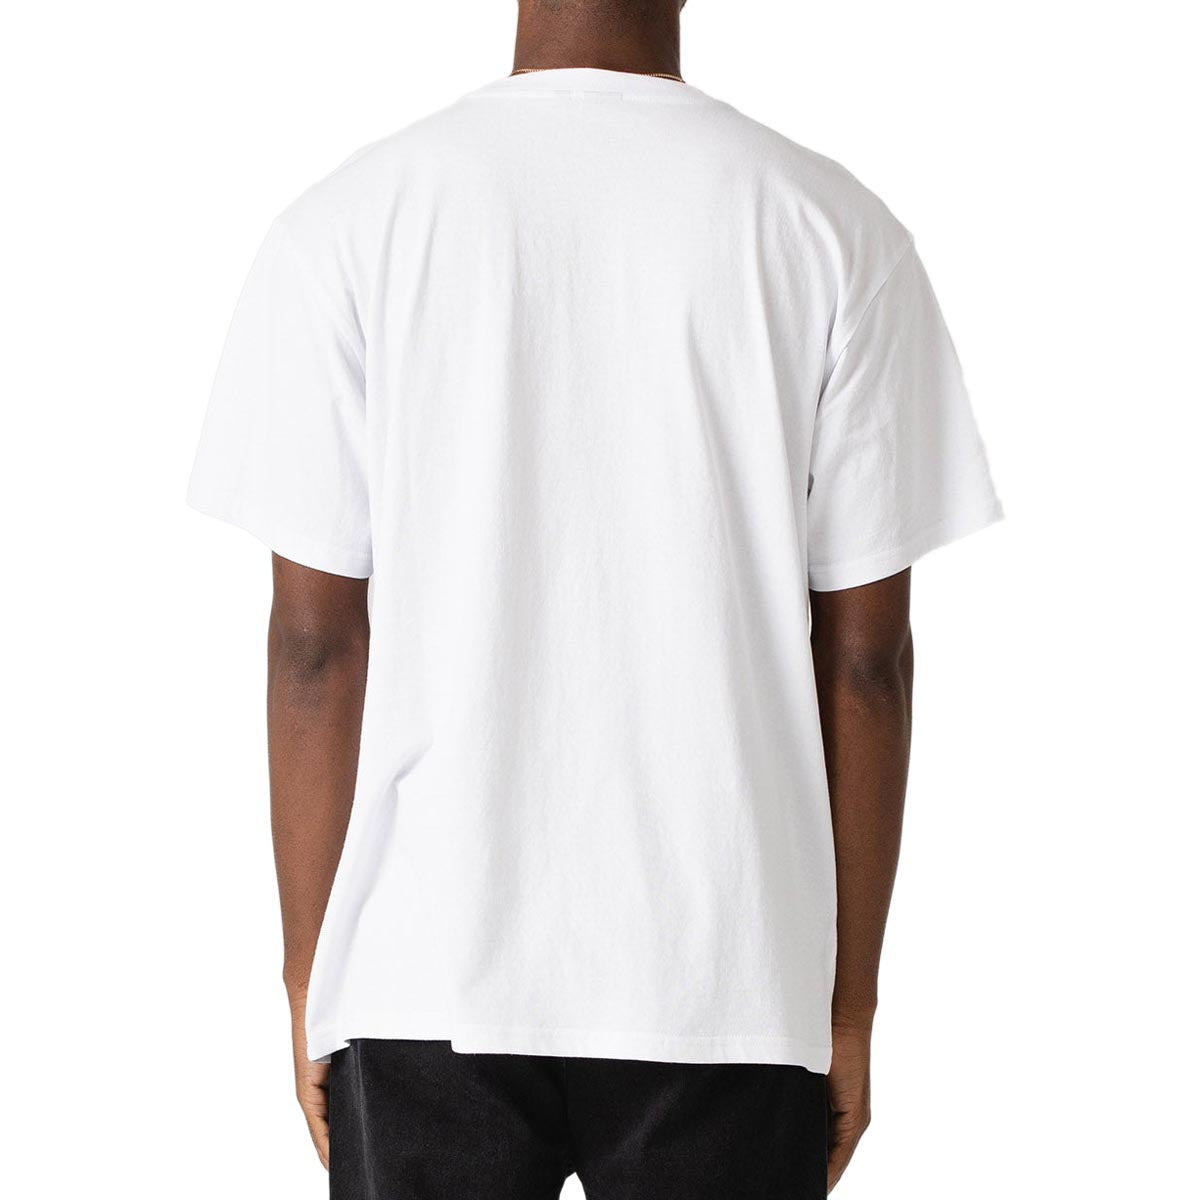 Former Remaining T-Shirt - White image 4